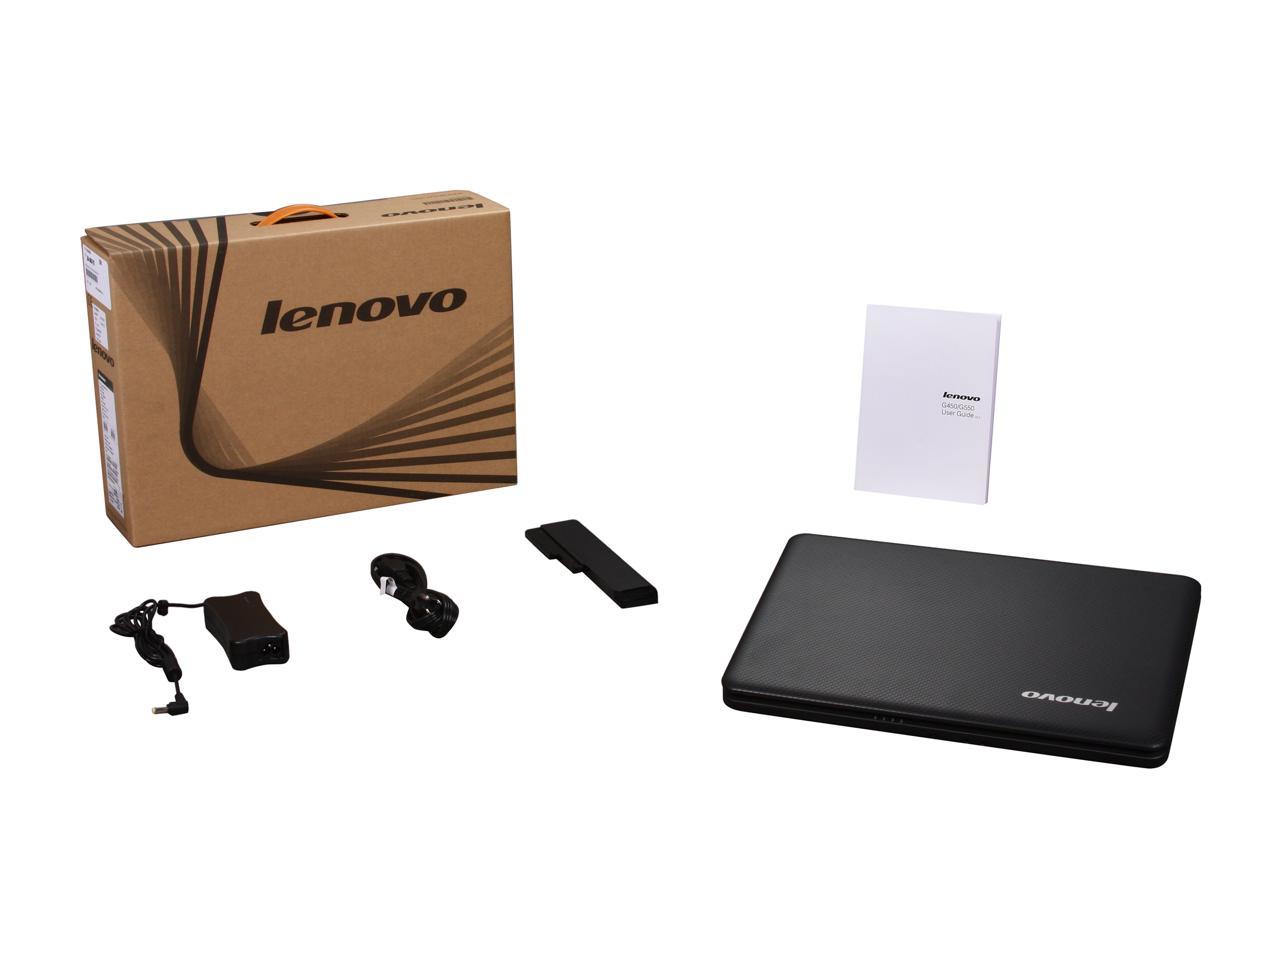 Lenovo Laptop G550(2958-8GU) Intel Celeron 900 (2.2GHz) 3GB Memory 